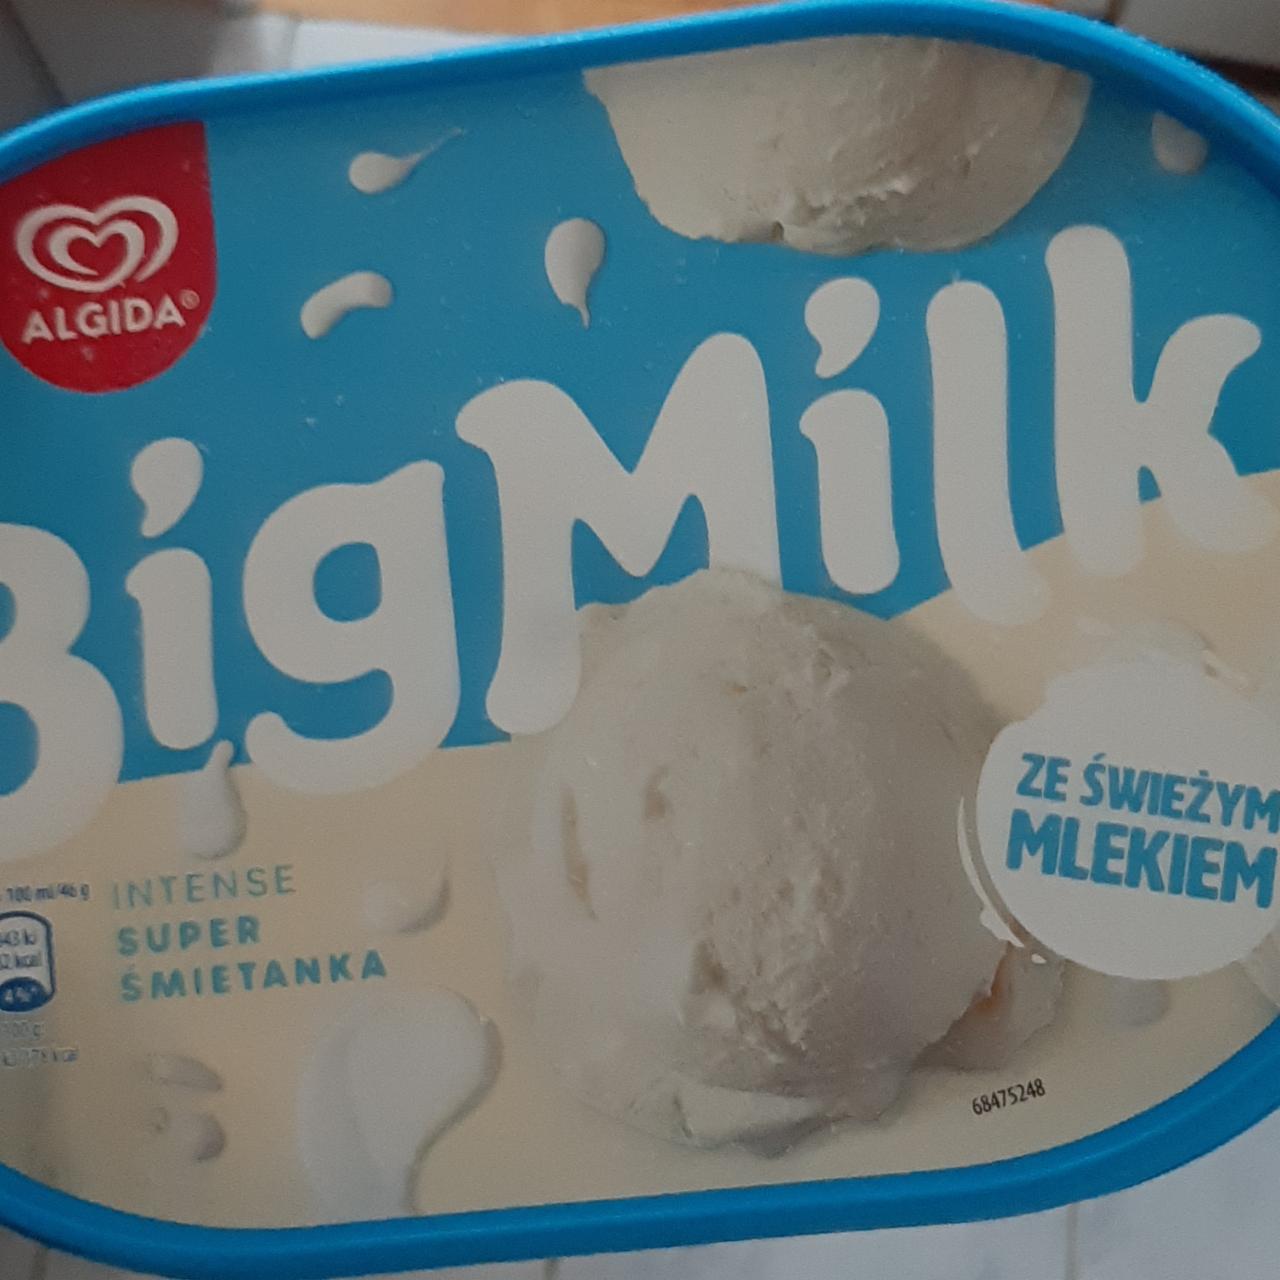 Фото - мороженое супер сливки Big milk Algida